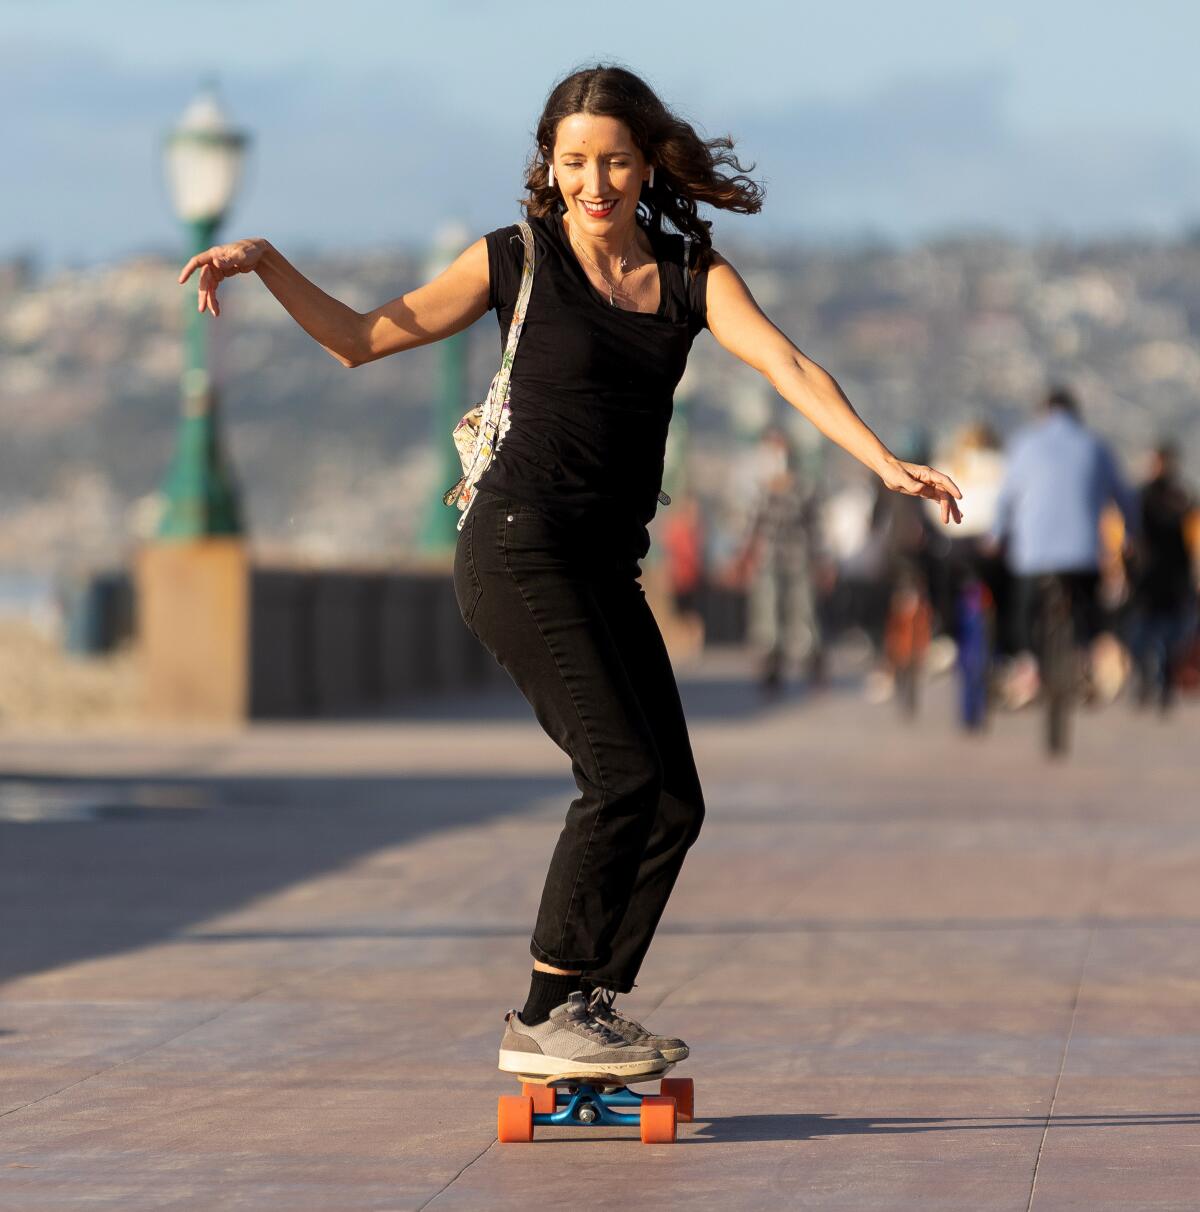 How Supreme Skateboard plays the edge